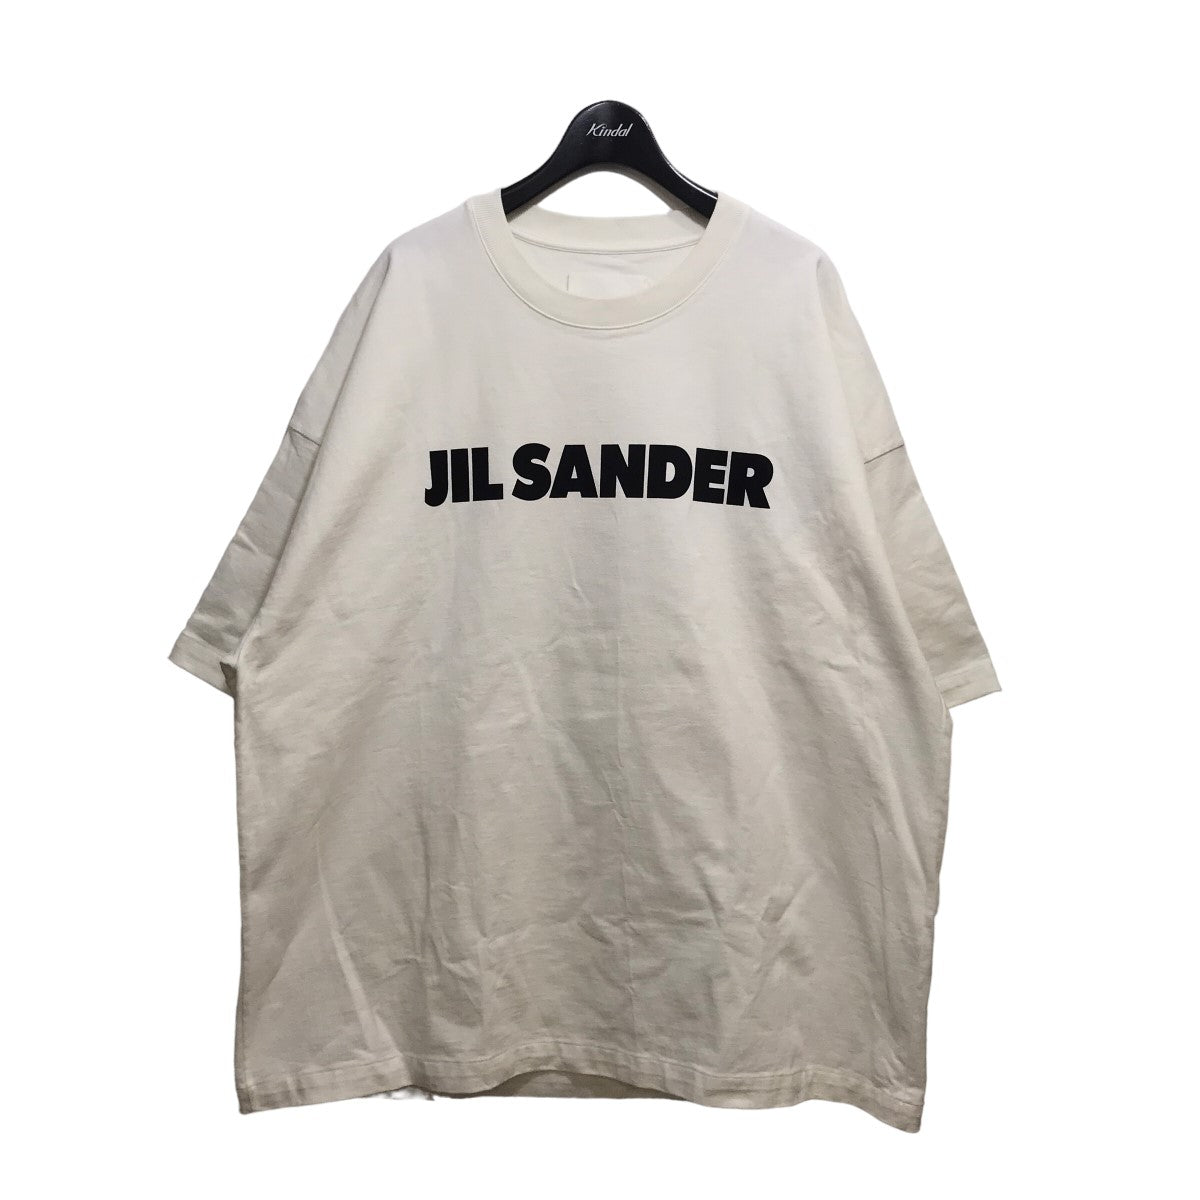 JIL SANDER(ジルサンダー) オーバーサイズロゴTシャツJSMT707045 